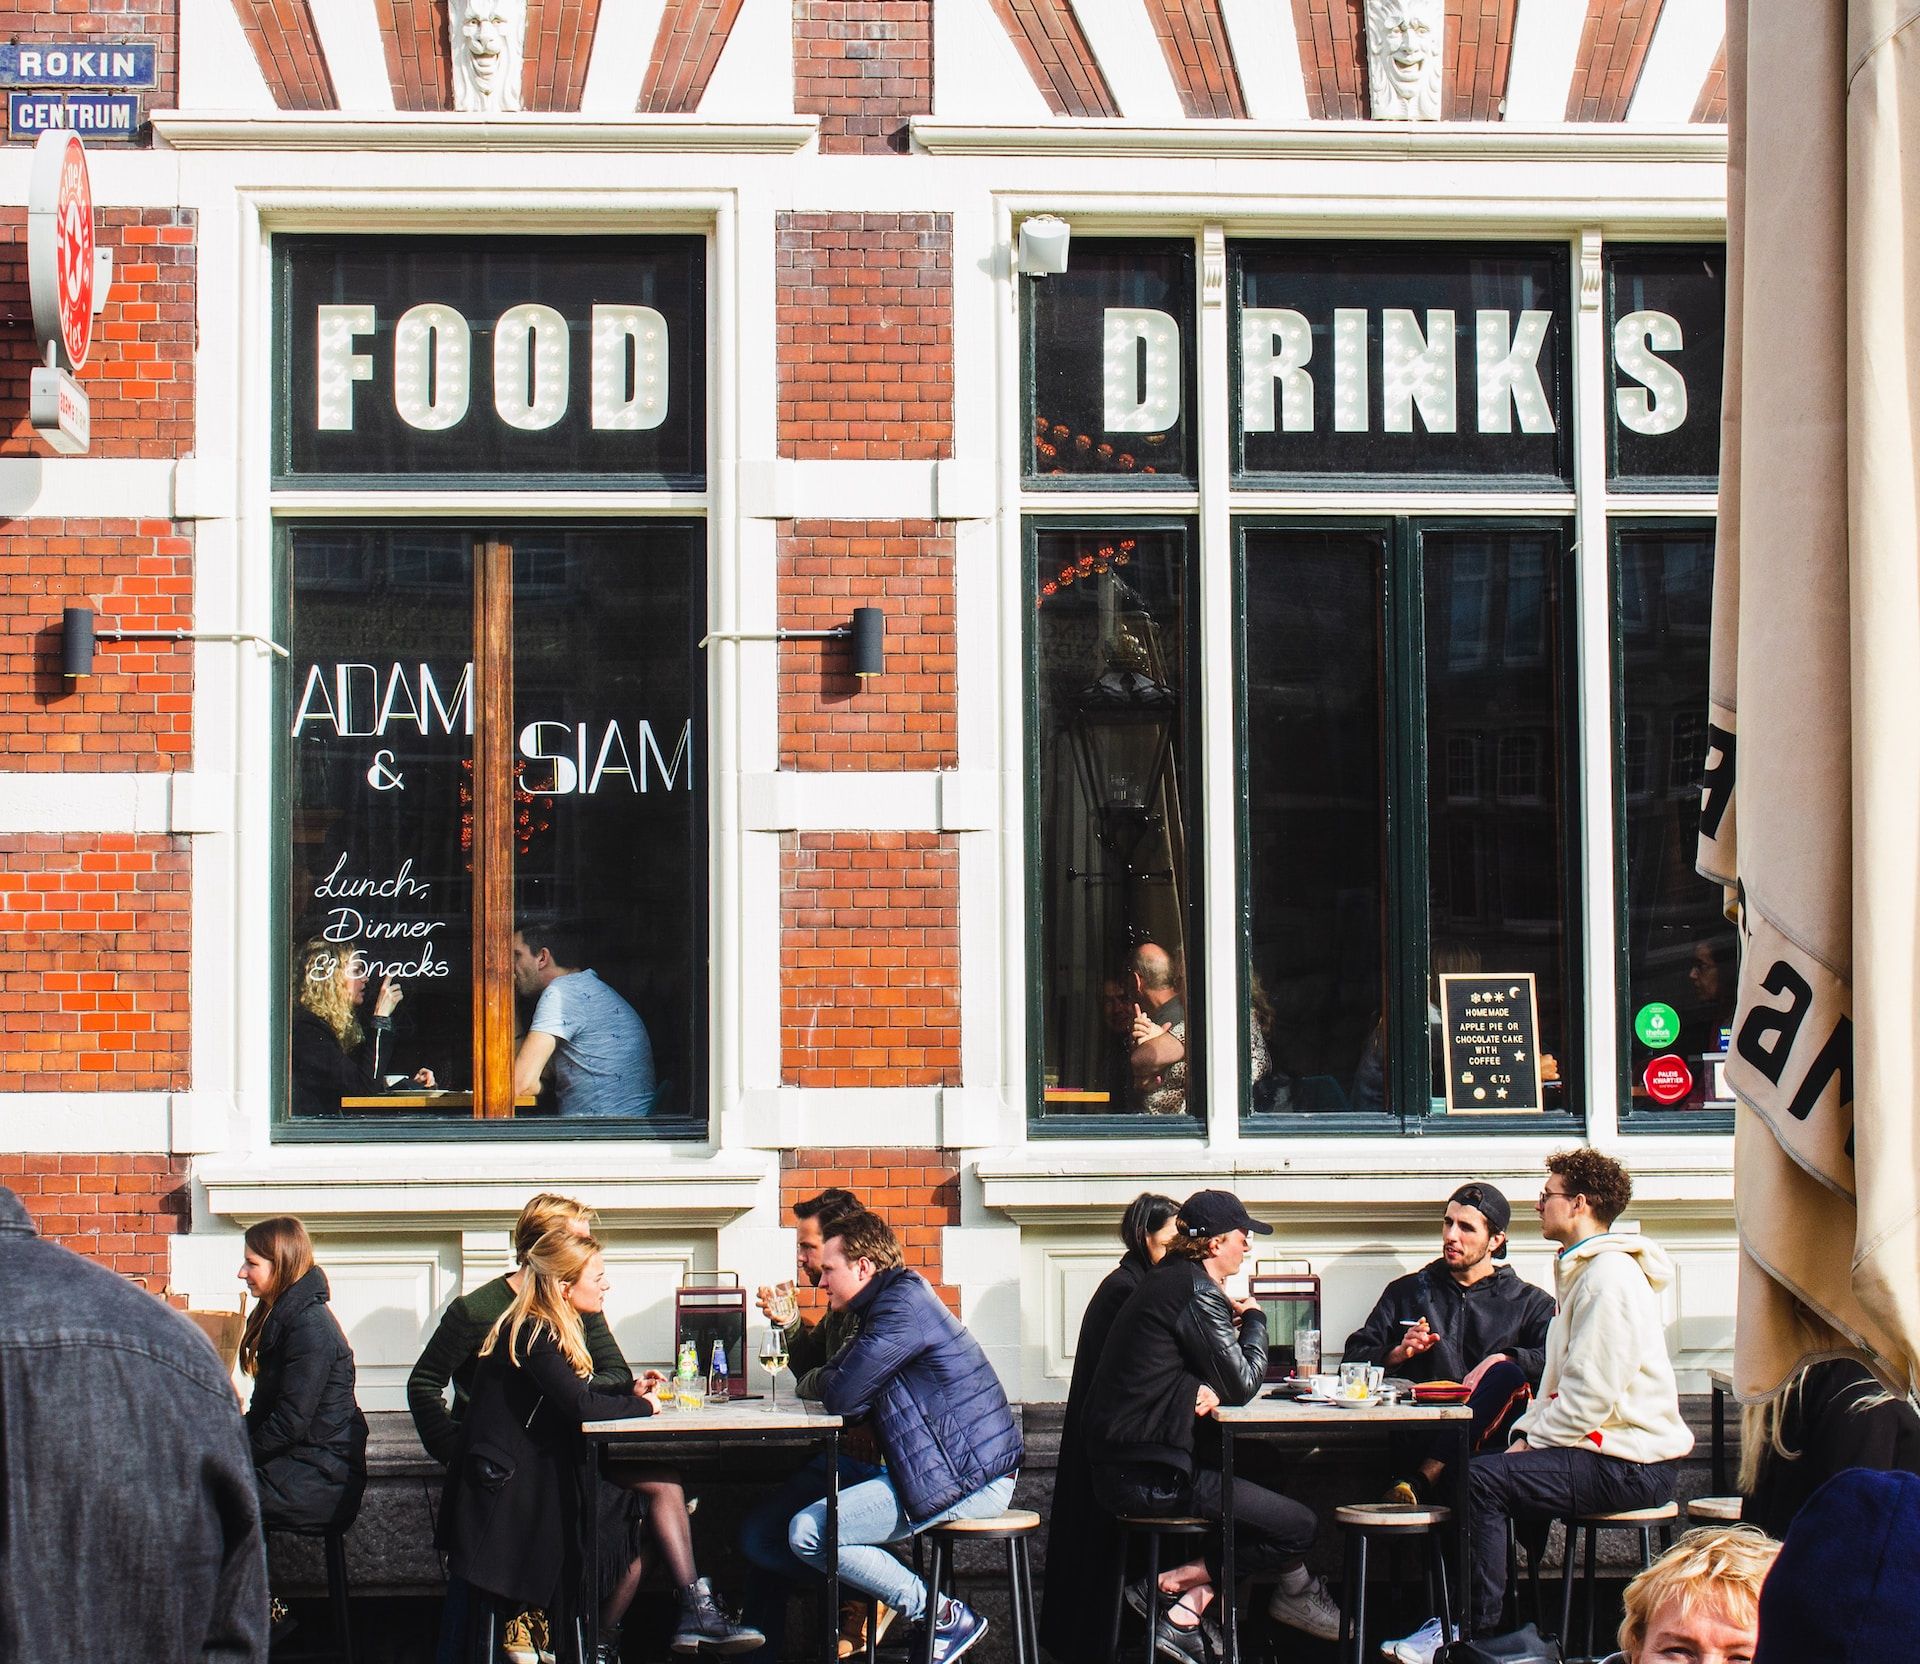 An outdoor bar in Amsterdam